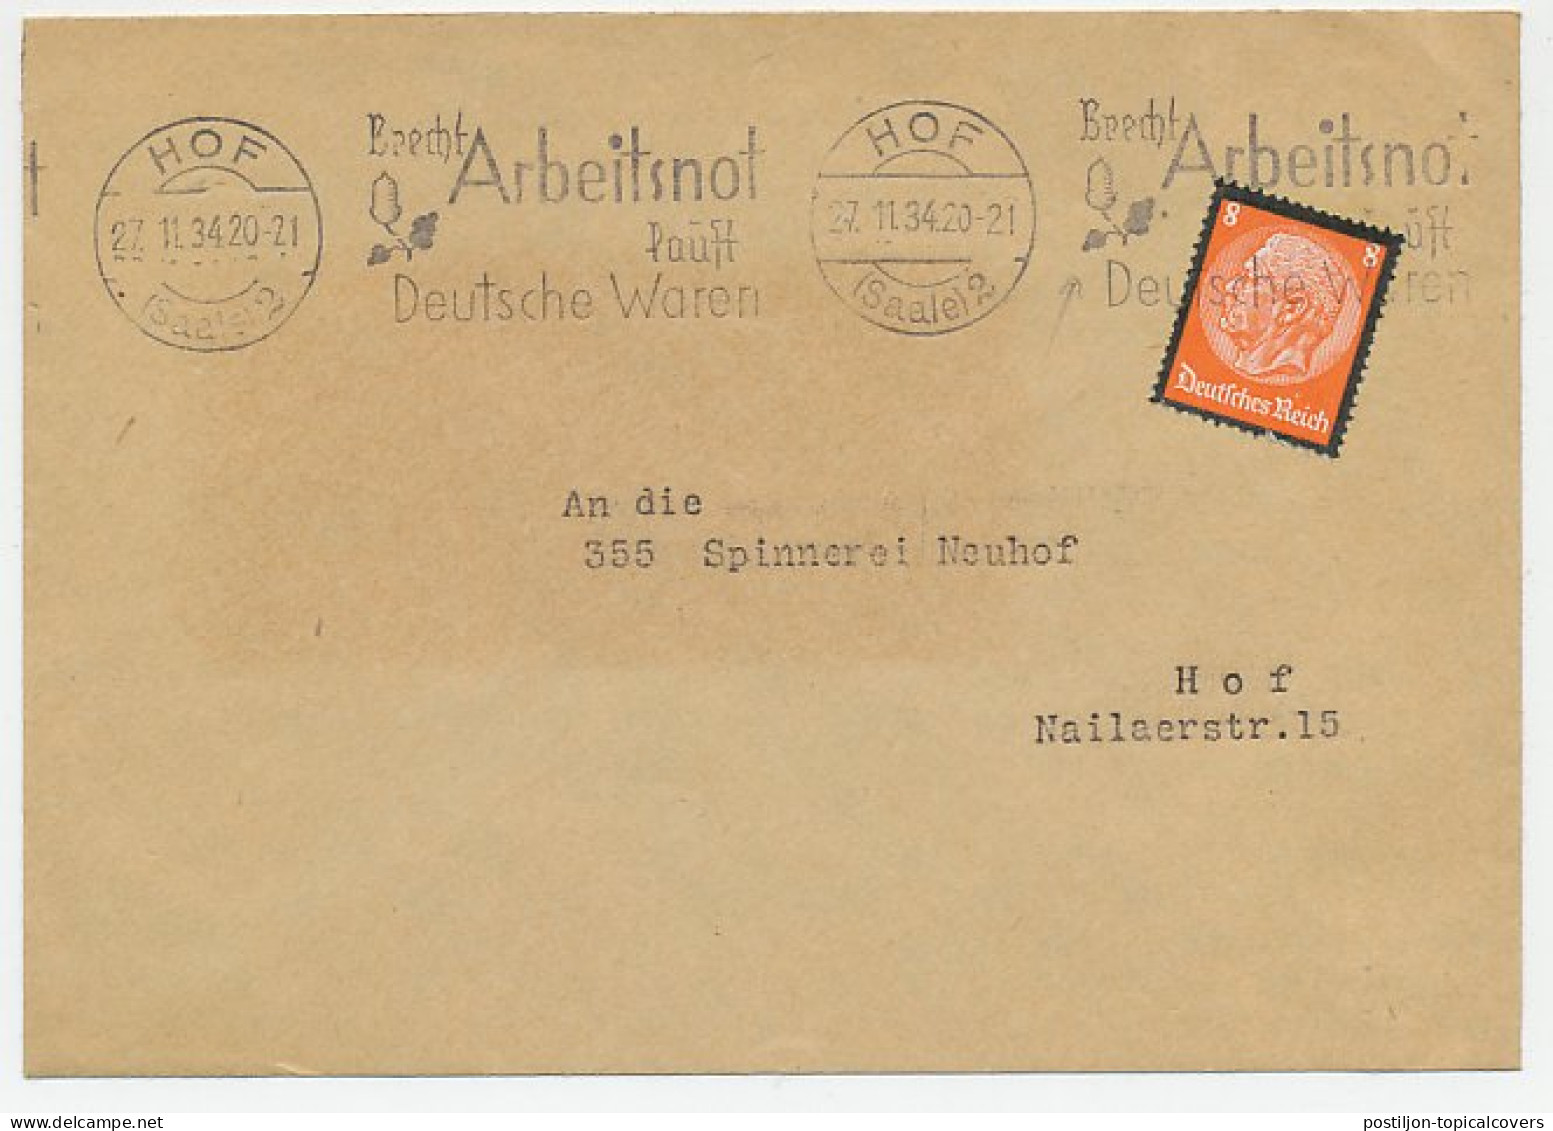 Cover / Postmark Germany 1934 Acorn - Labor Needs - Buy German Goods - Frutta